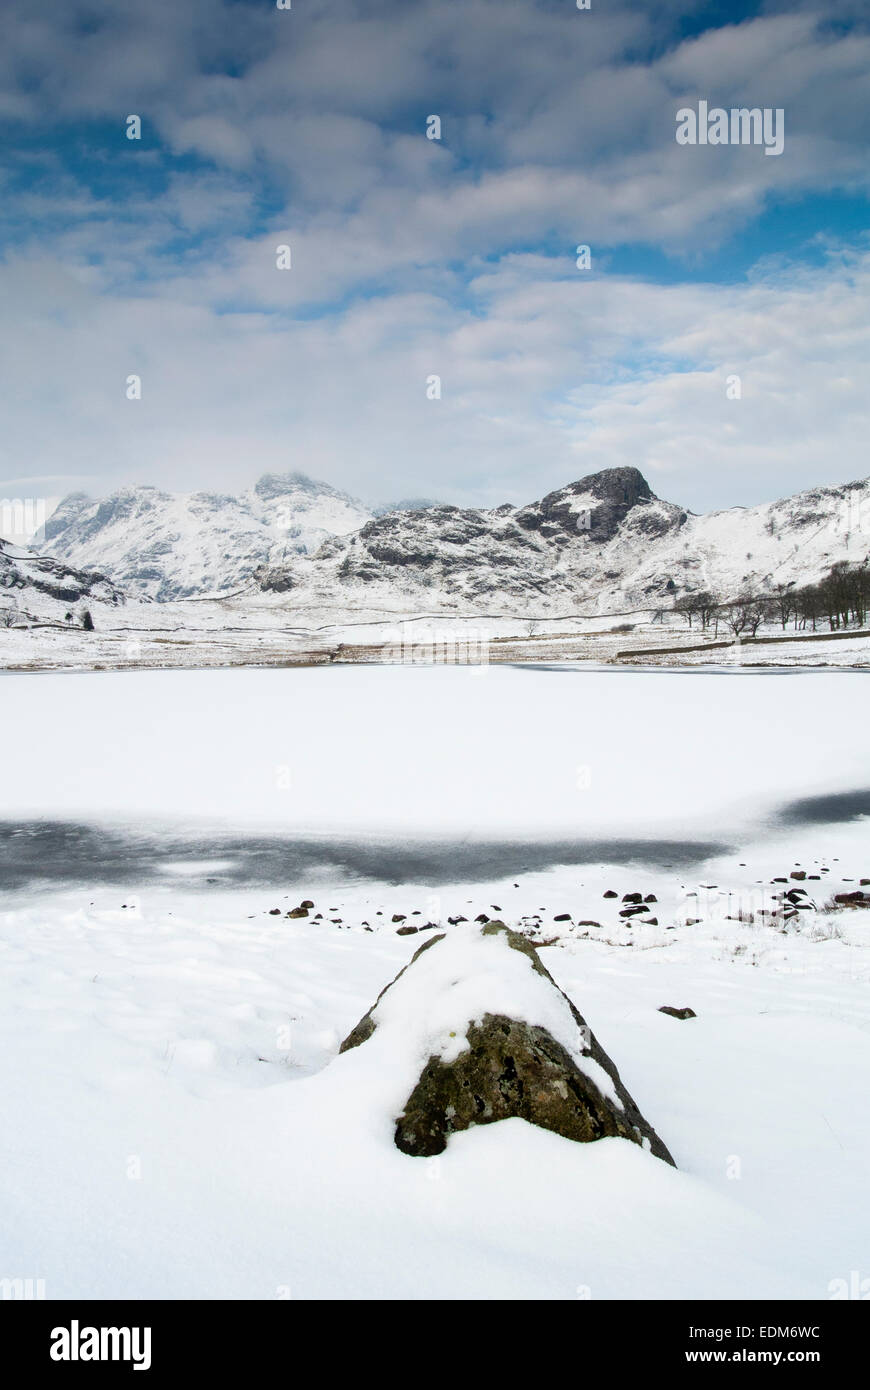 Blea Tarn, between Great Langdale and Little Langdale, frozen in winter. Cumbria, UK Stock Photo